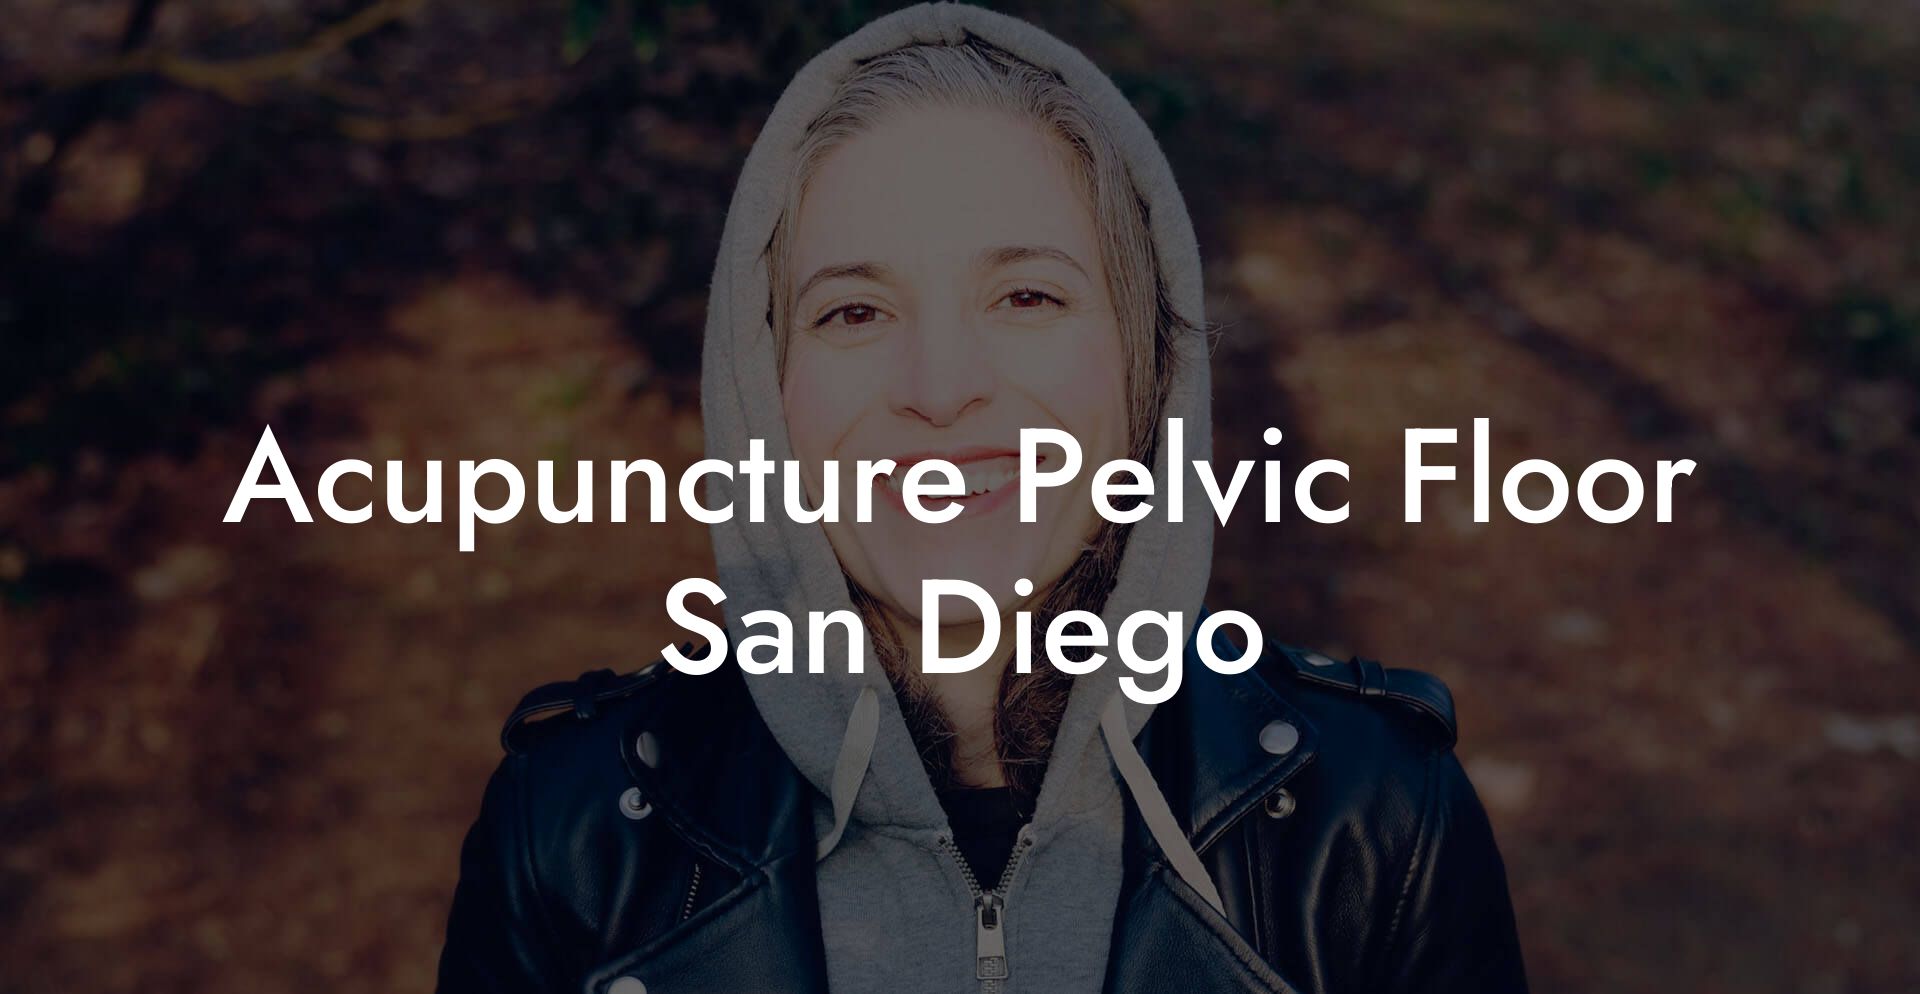 Acupuncture Pelvic Floor San Diego